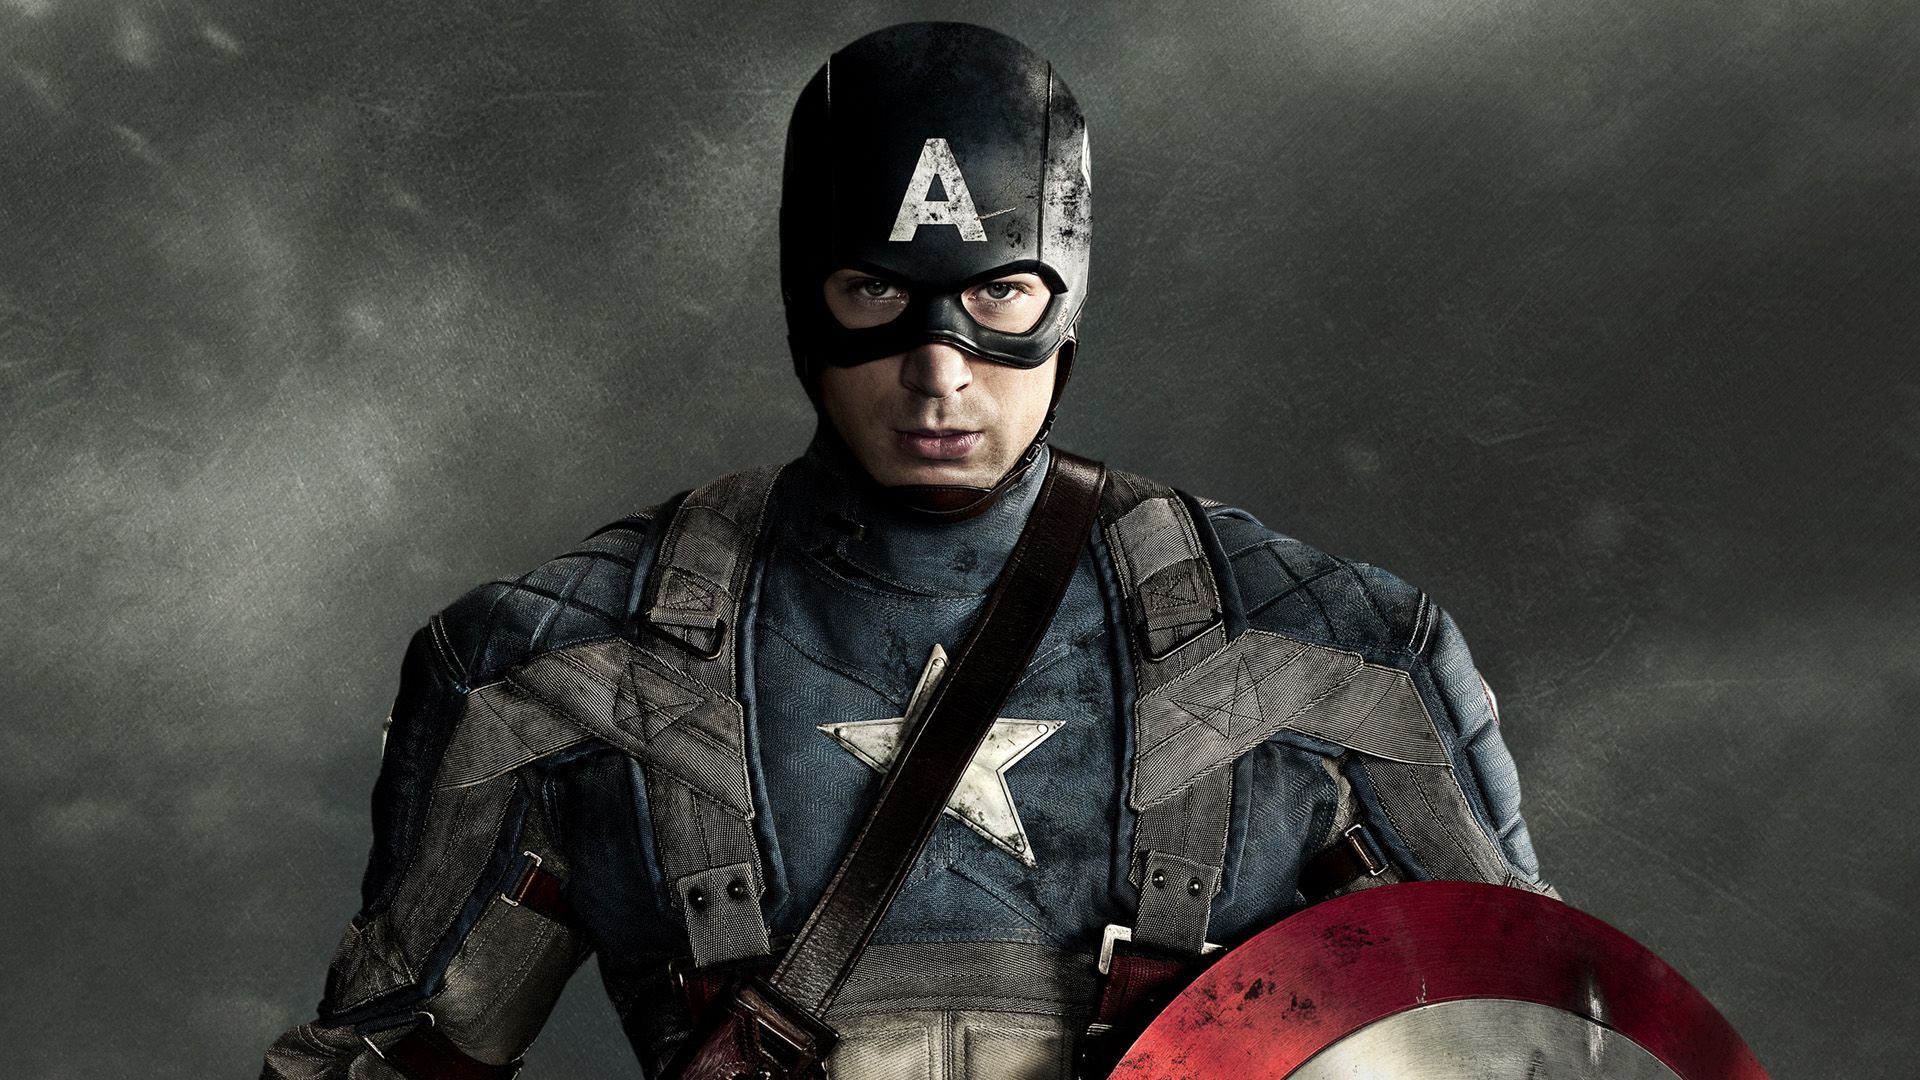 Captain America HD wallpaper free download, Details